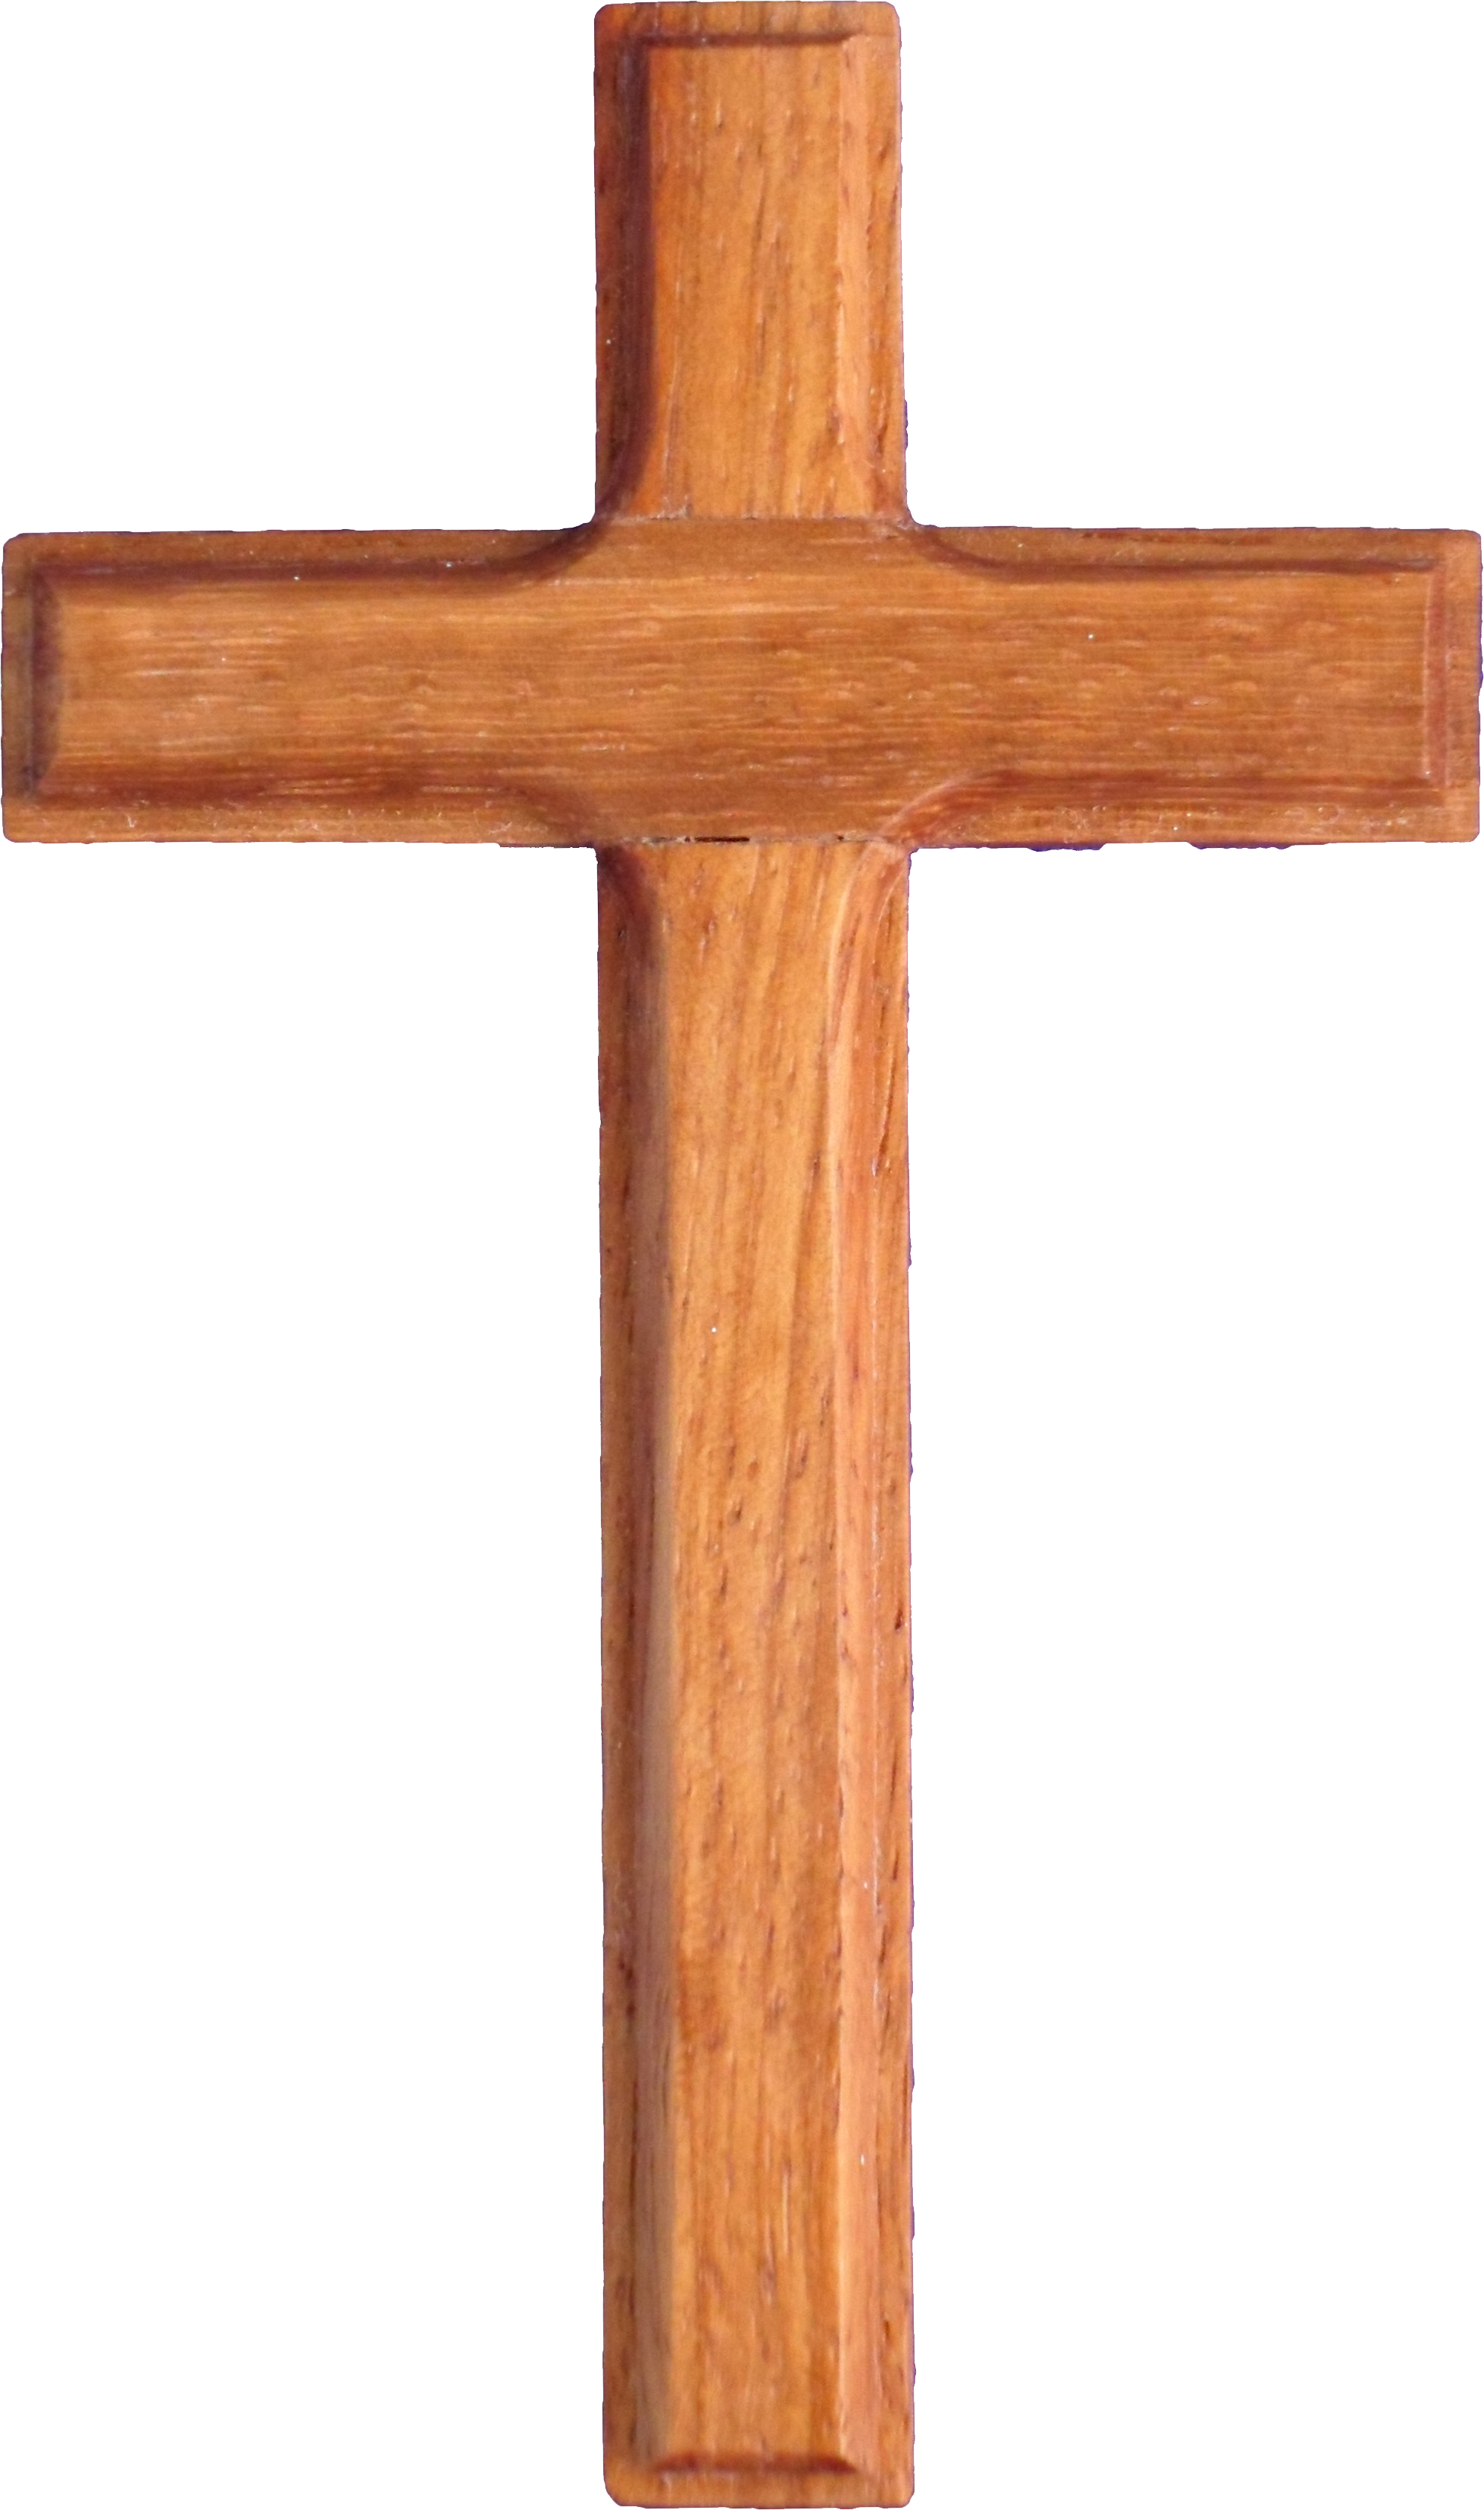 Wood Christian Cross Free Transparent Image HQ Clipart